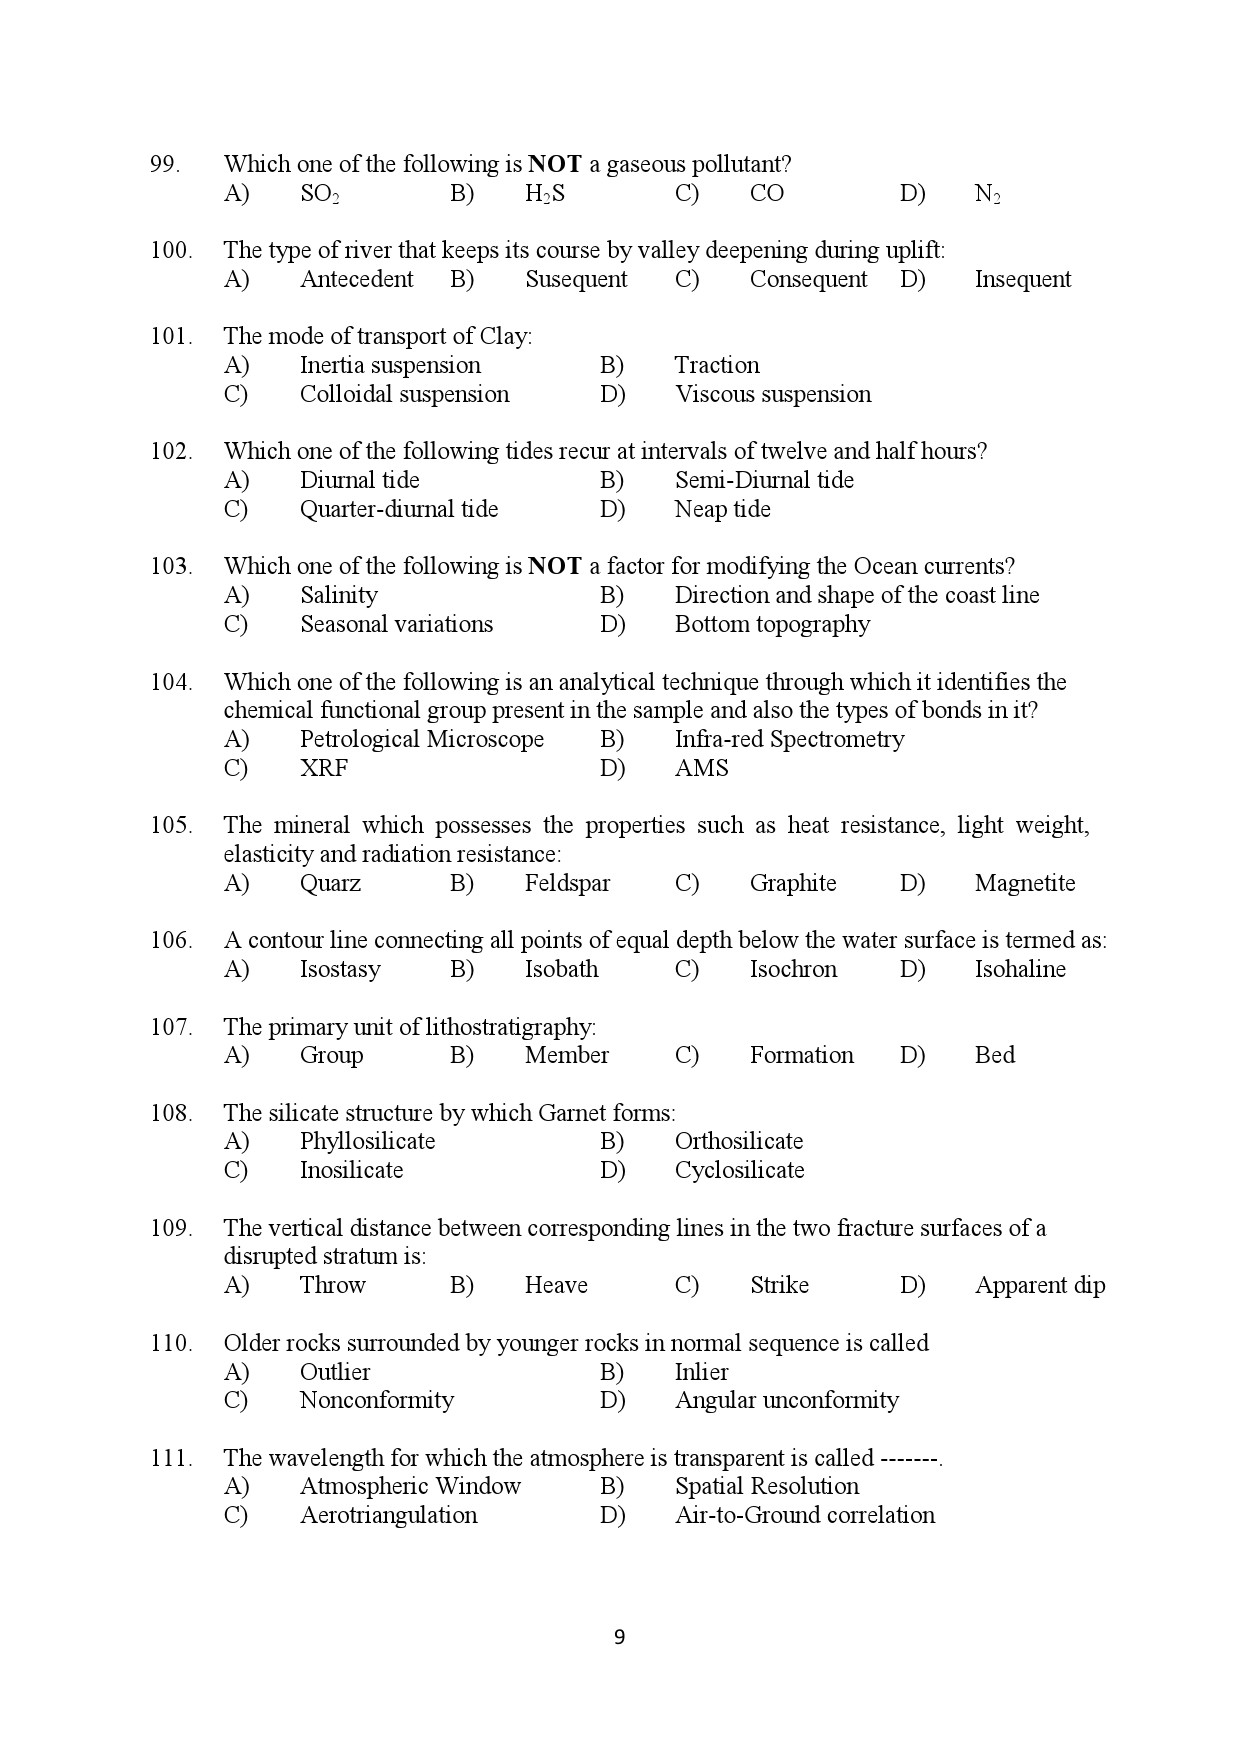 Kerala SET Geology Exam Question Paper February 2020 9